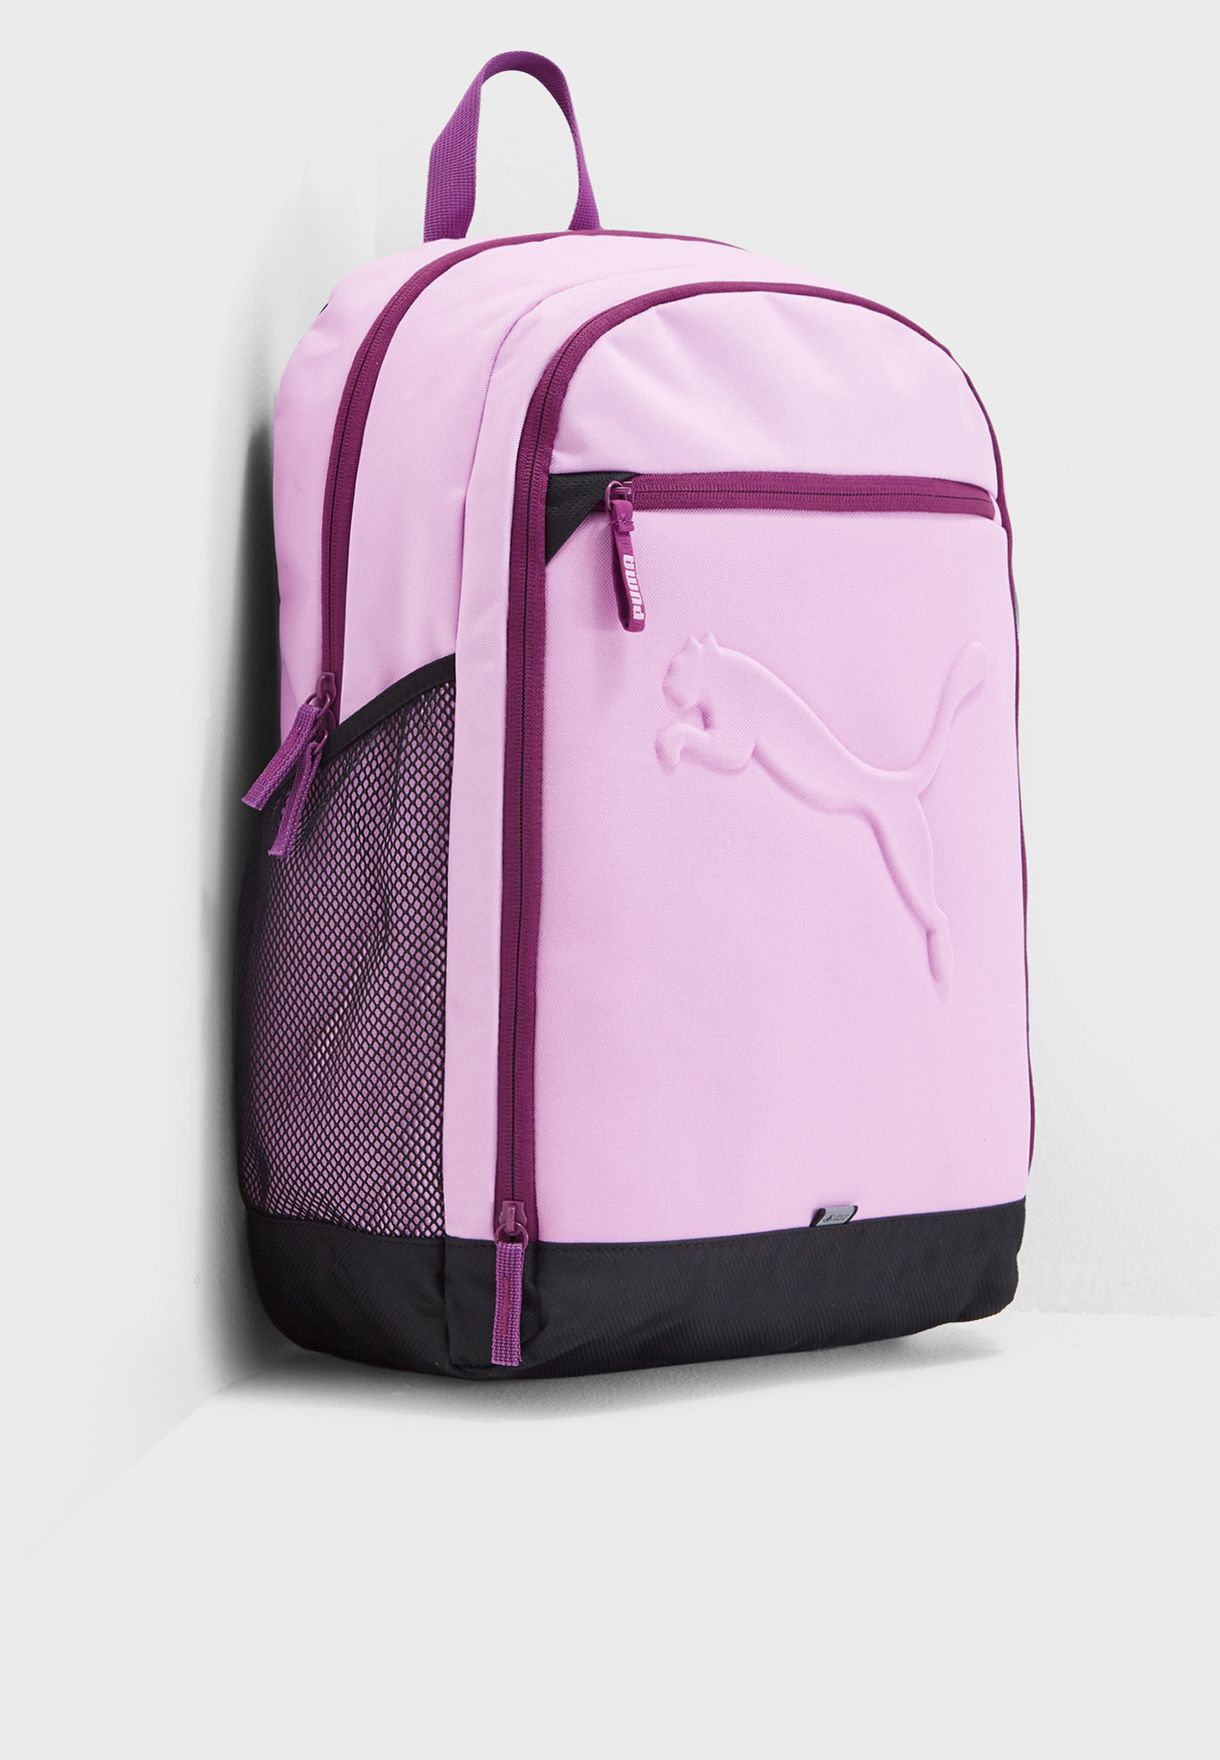 purple puma backpack